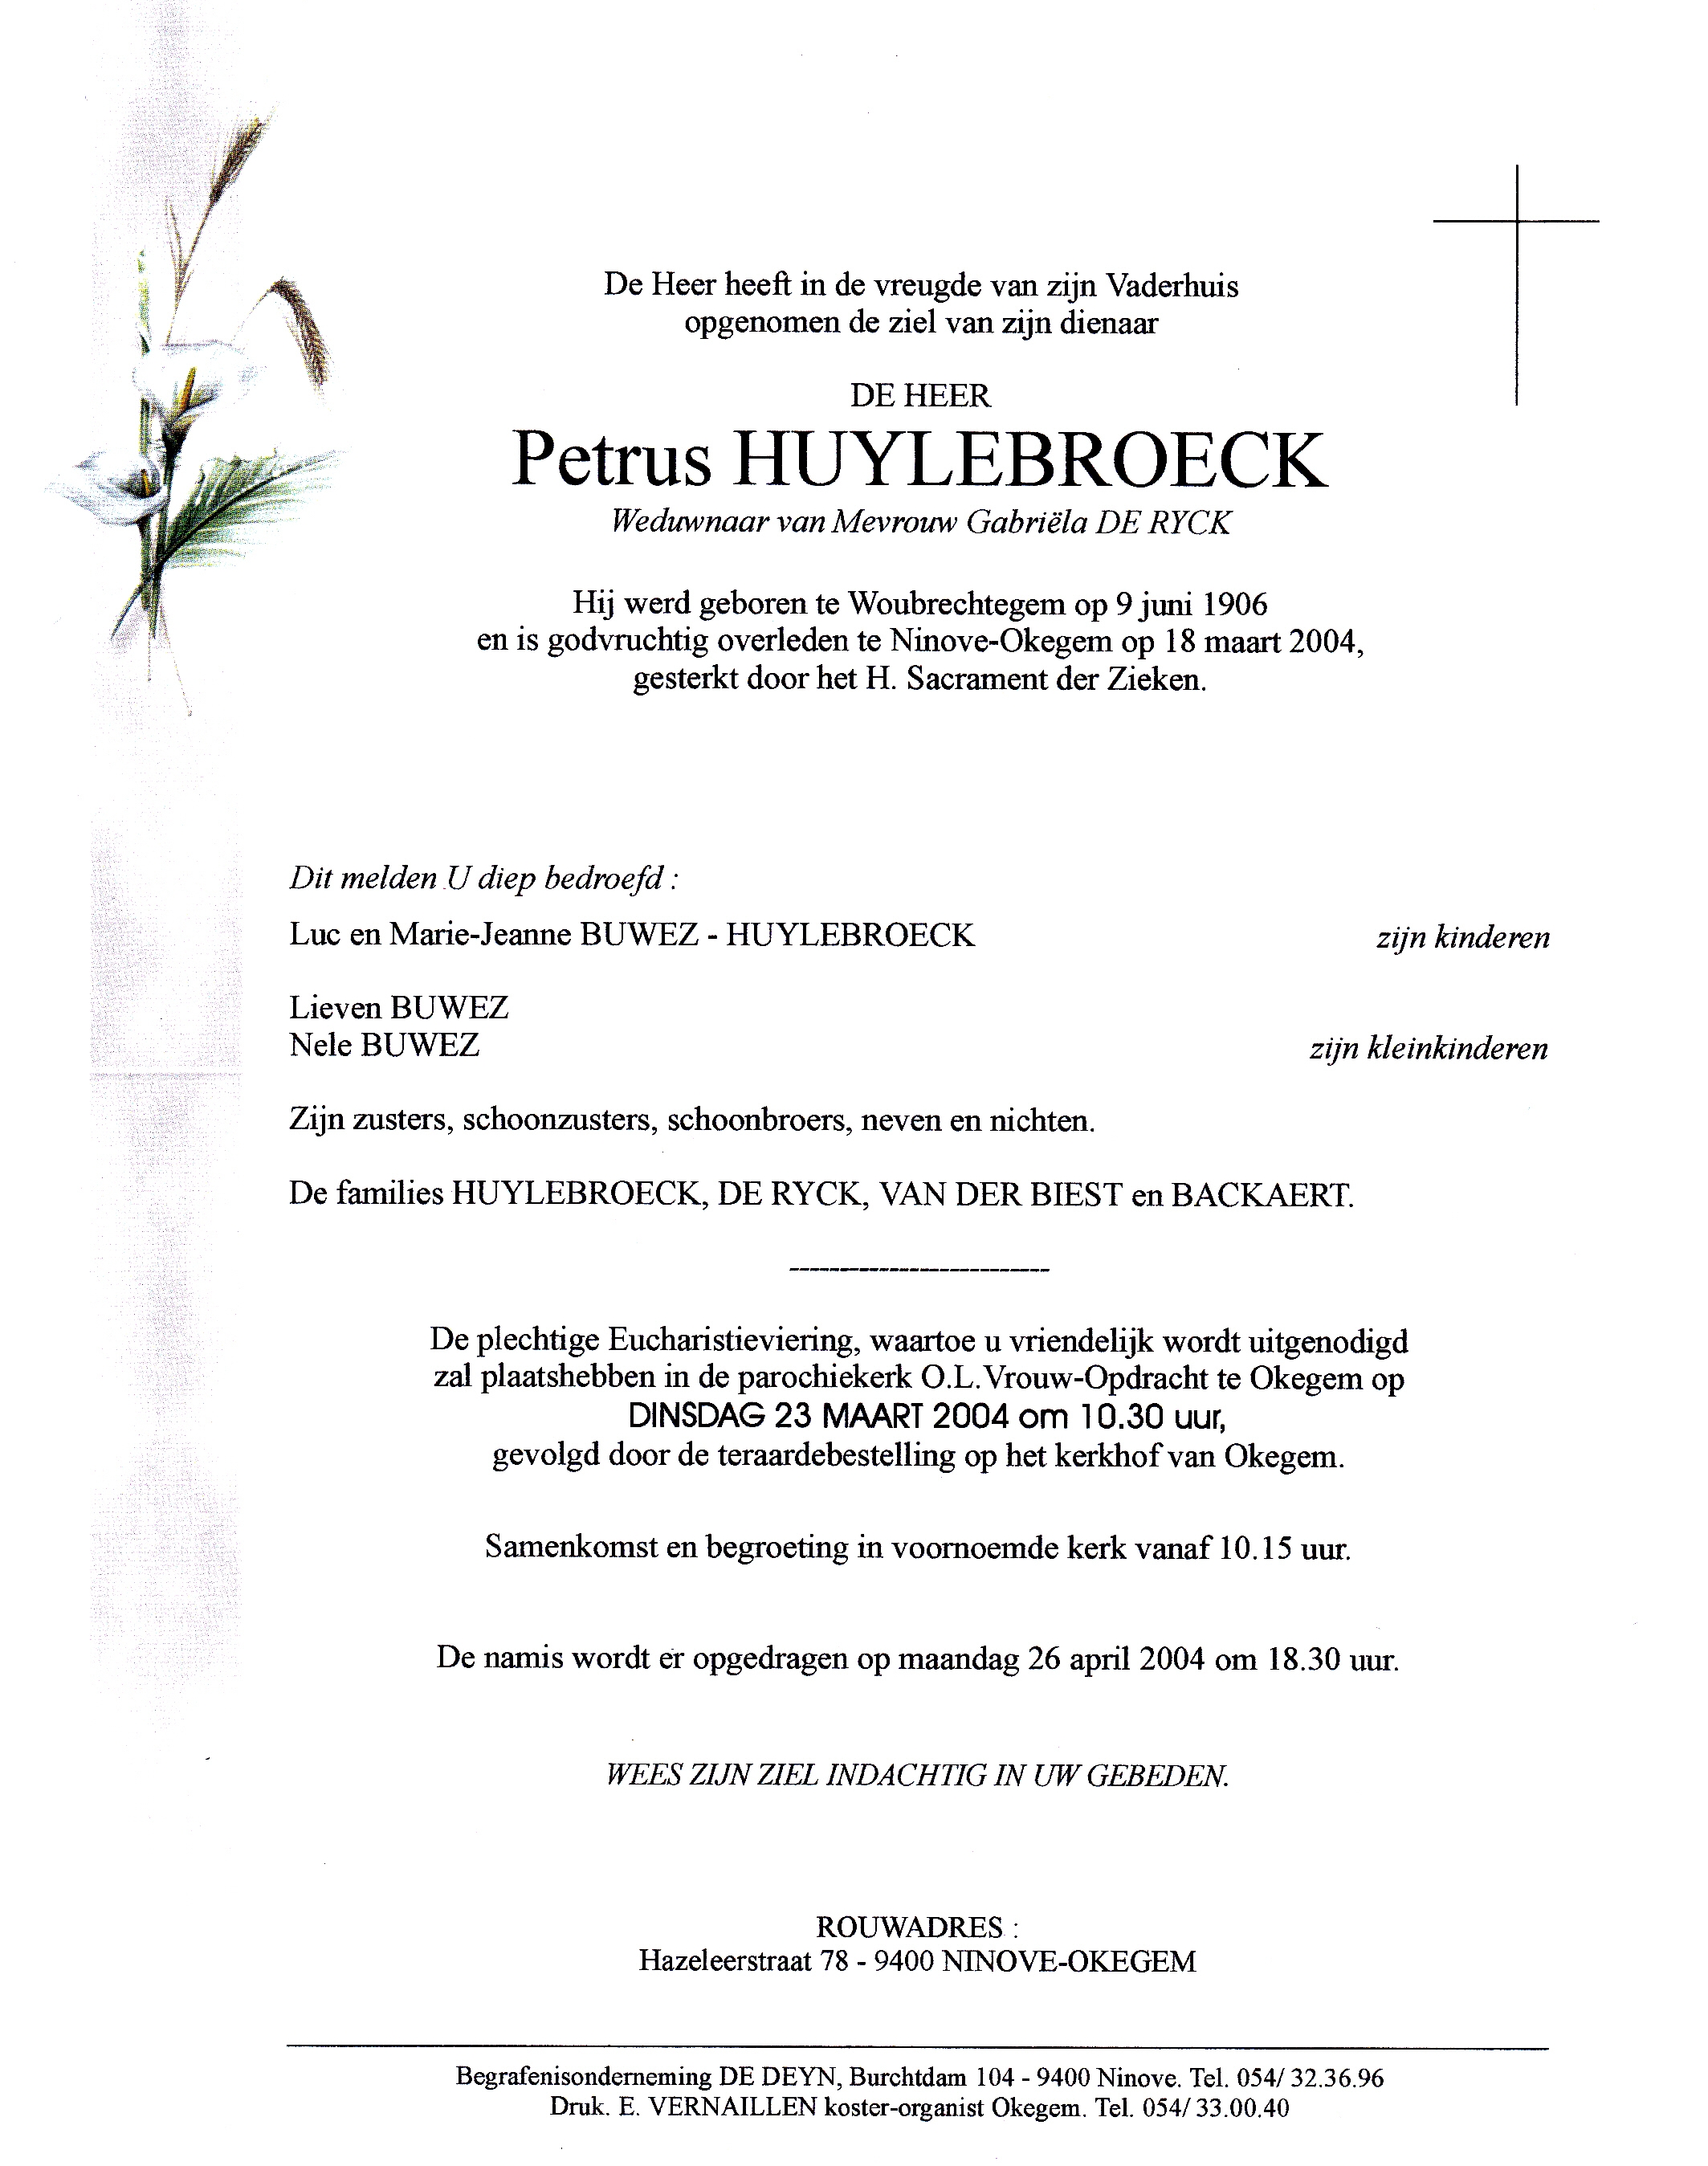 Huylenbroeck Petrus  